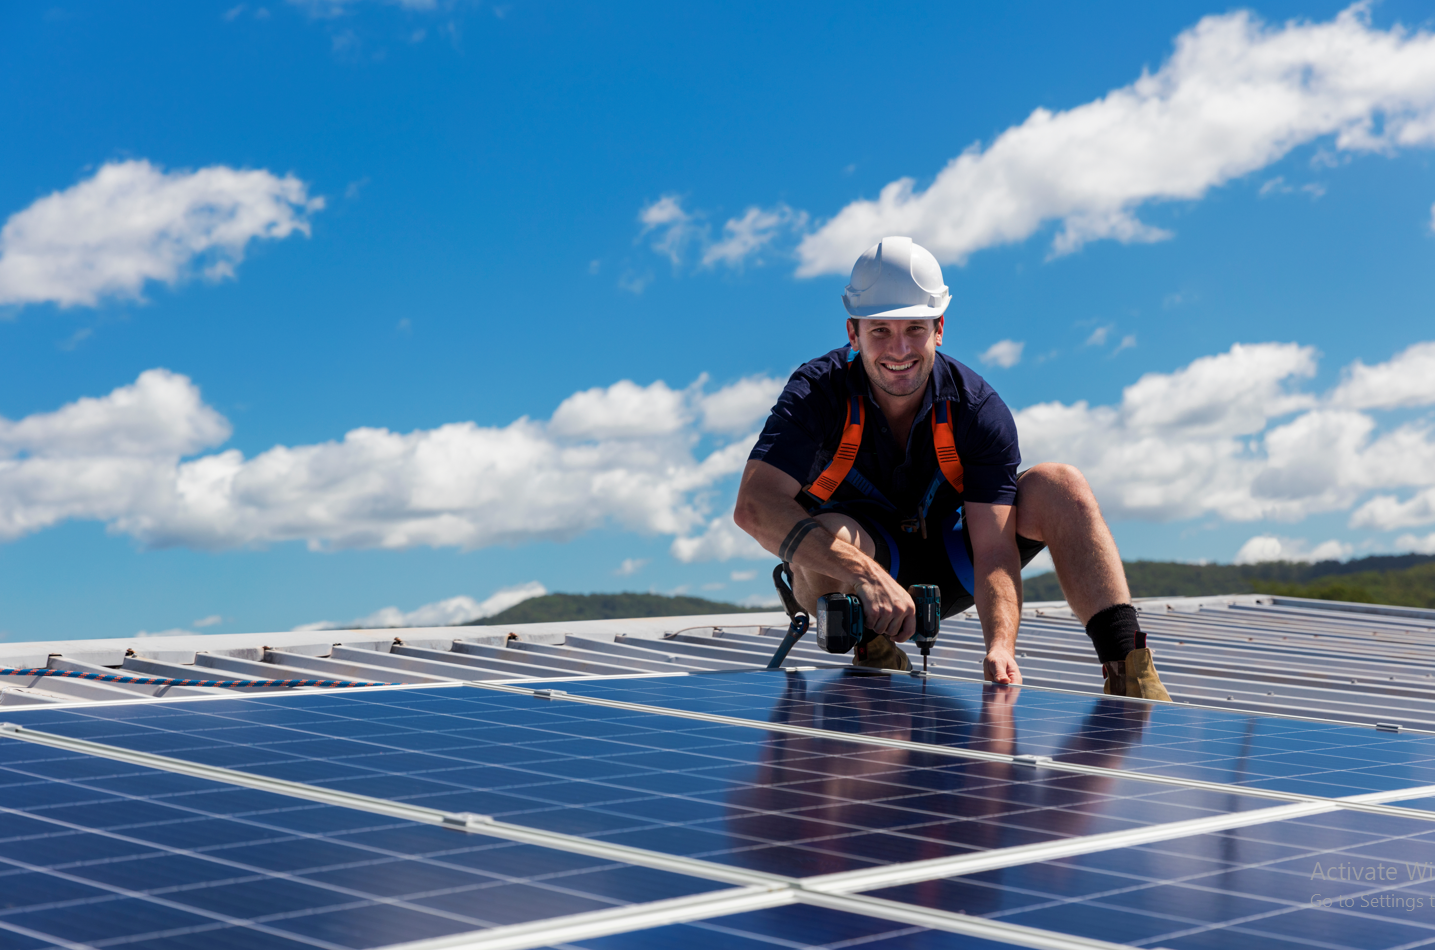 Solarfix Announces a New Emergency Solar Repair Service for Brisbane Homeowners.